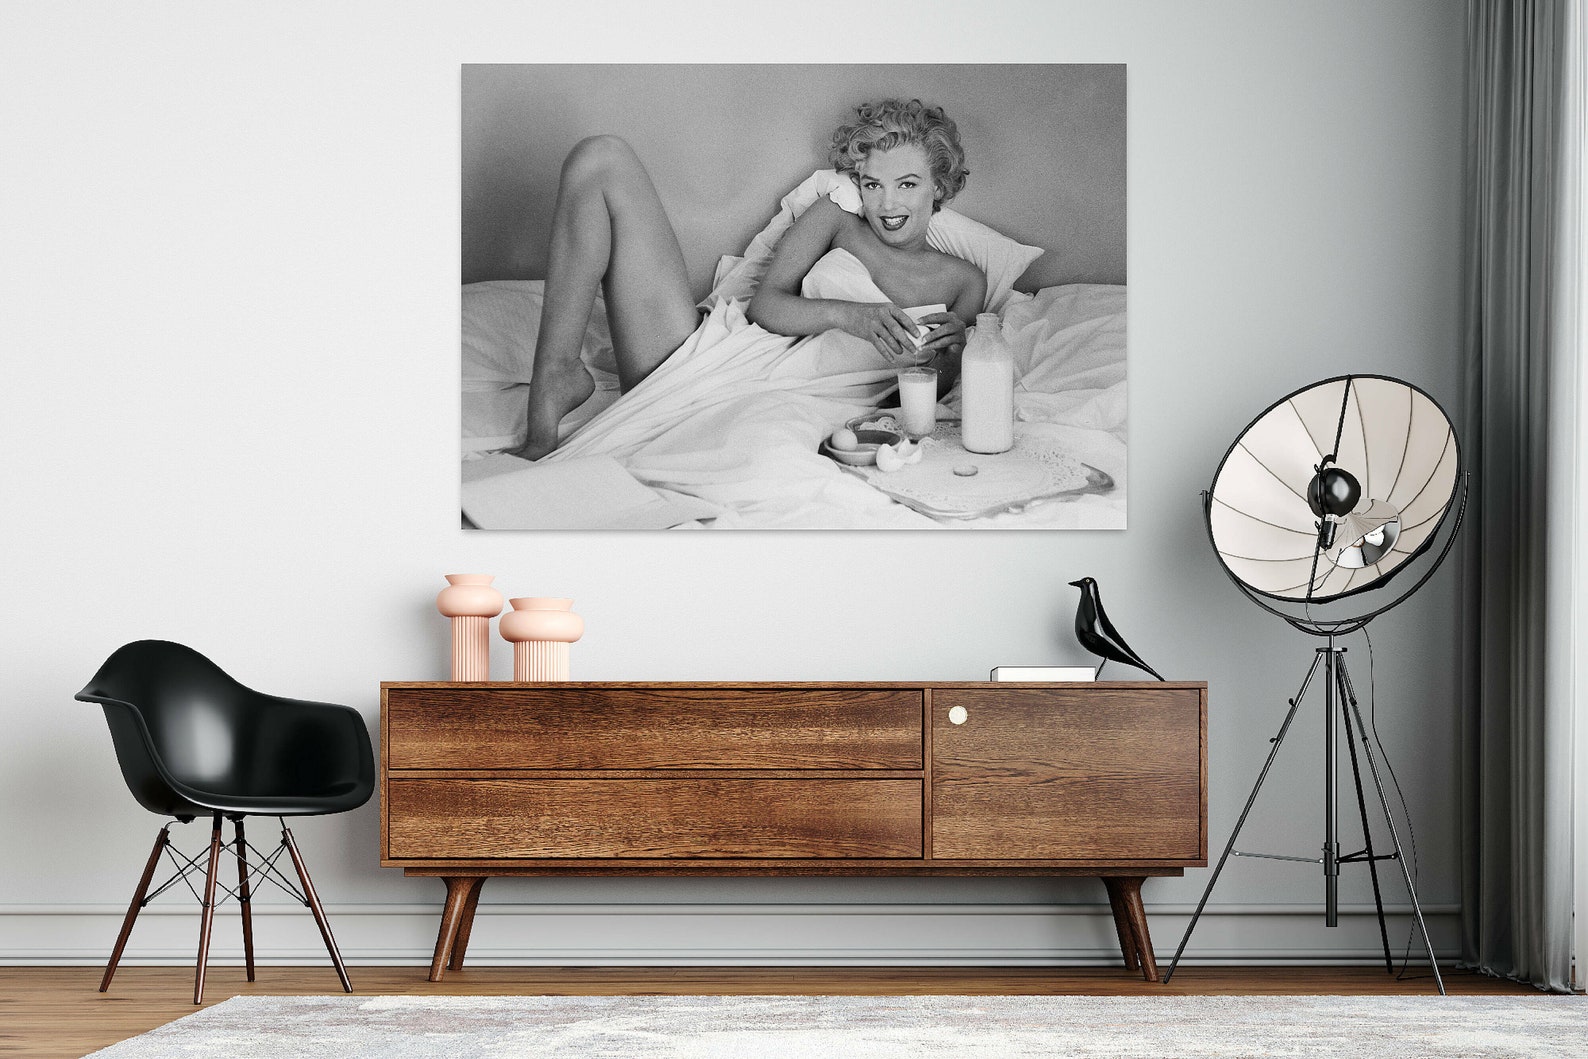 Marilyn Monroe Breakfast in Bed Poster in Bed With Marilyn - Etsy